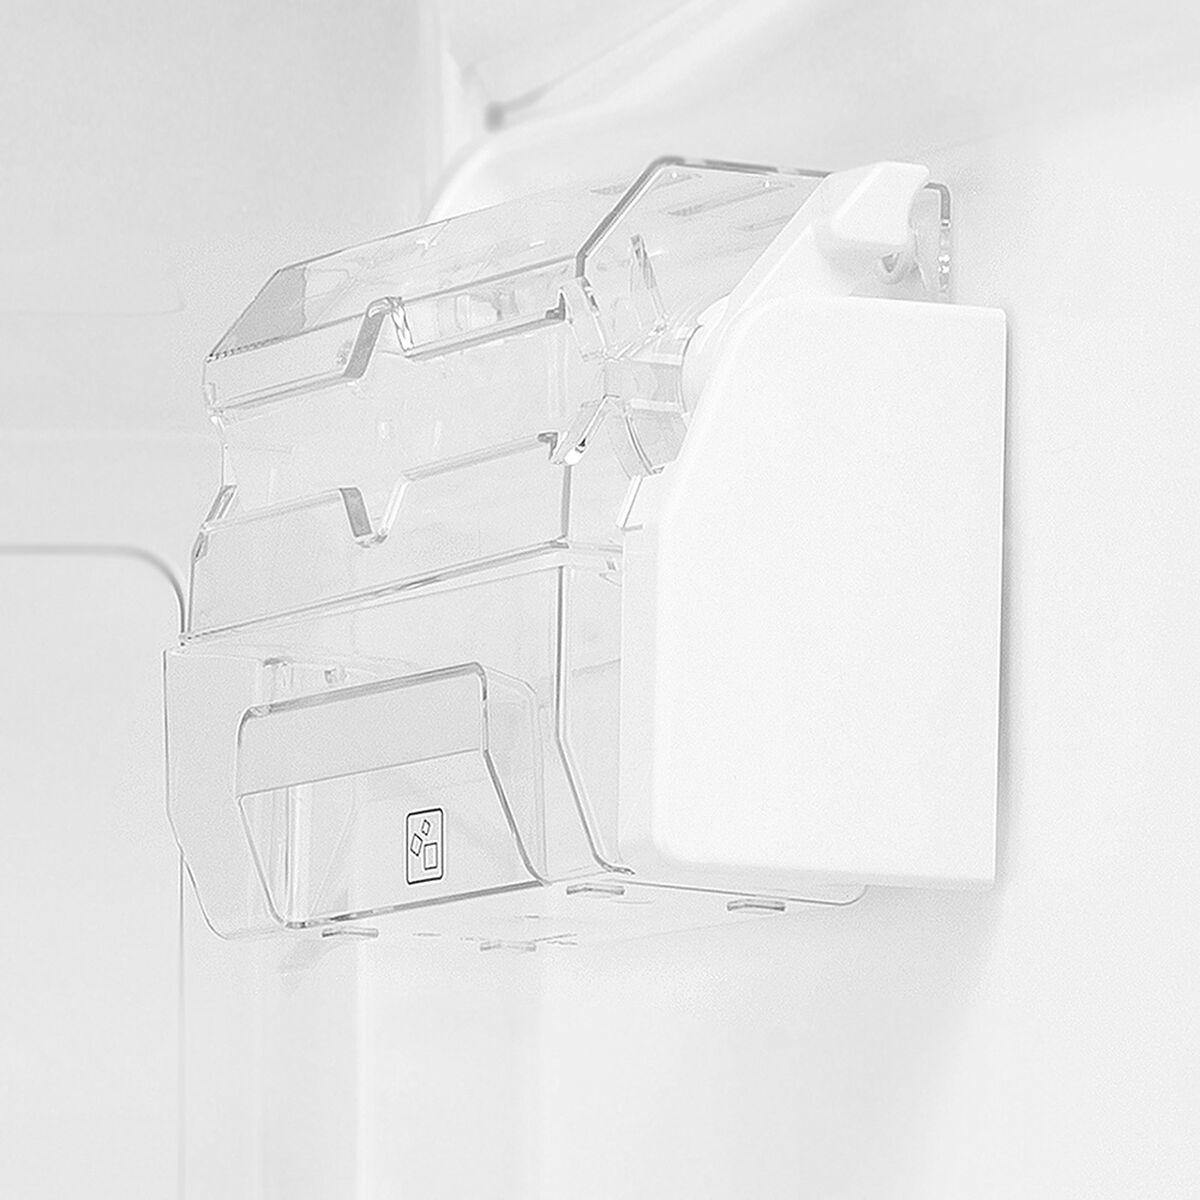 Refrigerador No Frost Mabe RMP400FHUG 390 lt